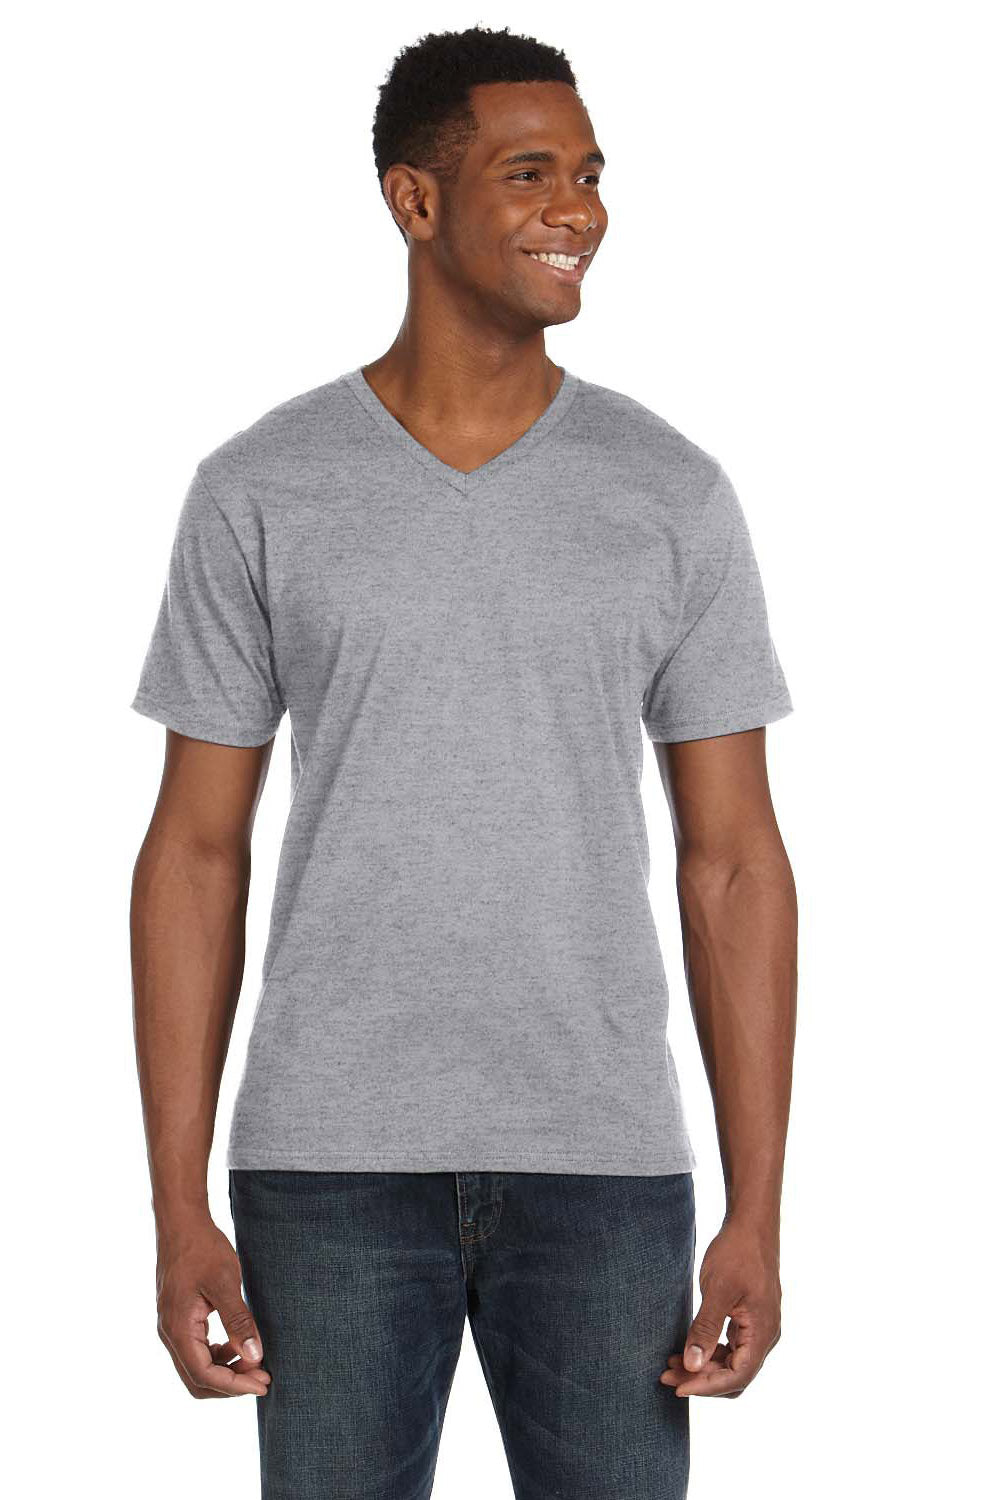 Anvil 982 Mens Short Sleeve V-Neck T-Shirt Heather Grey Front